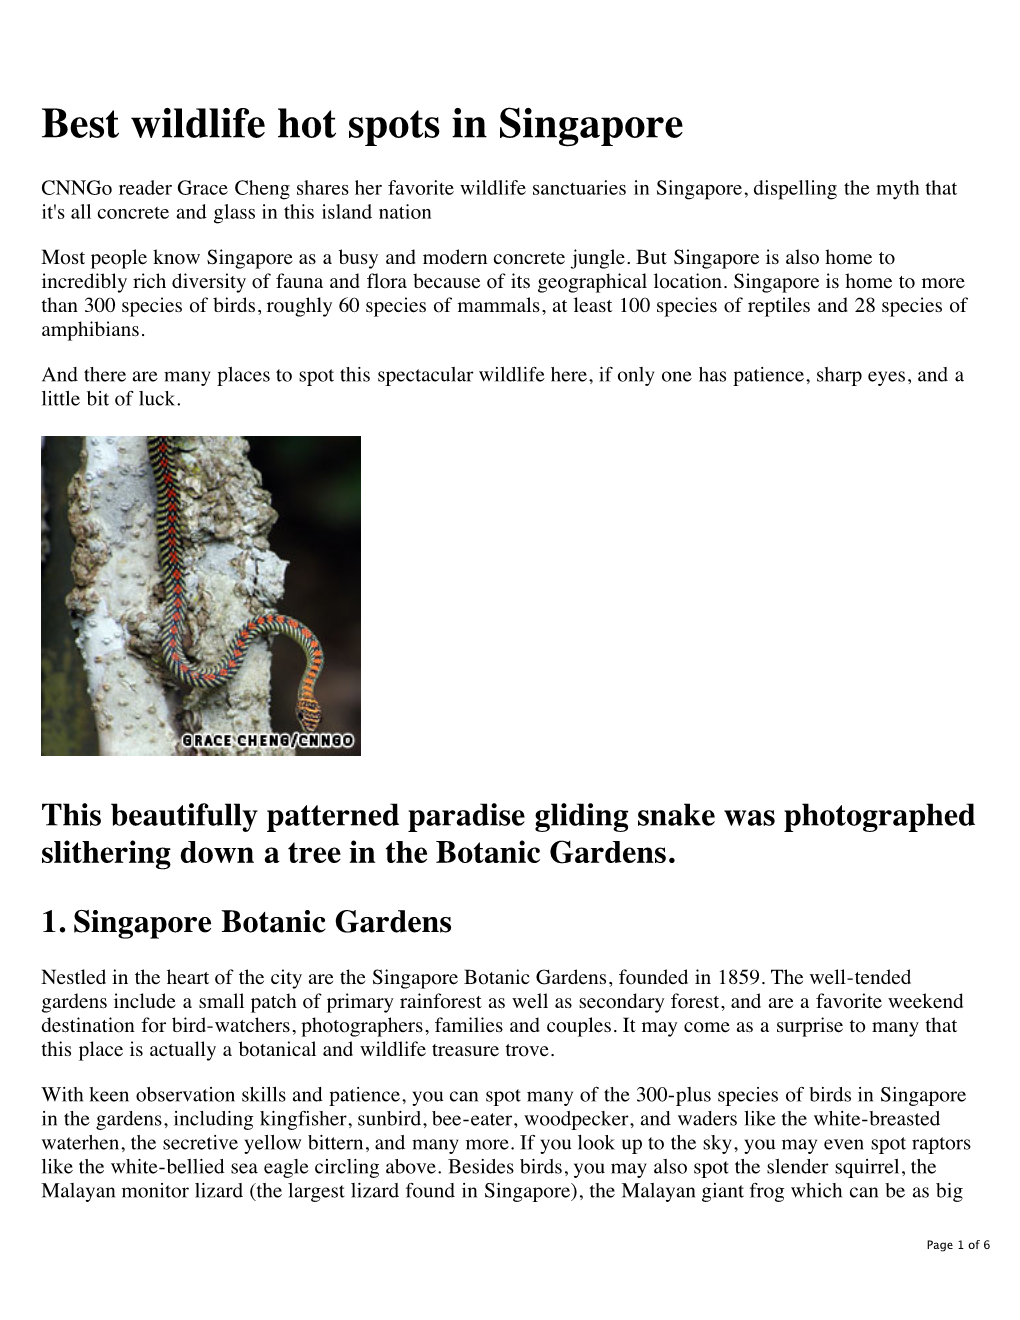 Best Wildlife Hot Spots in Singapore | Cnngo.Com